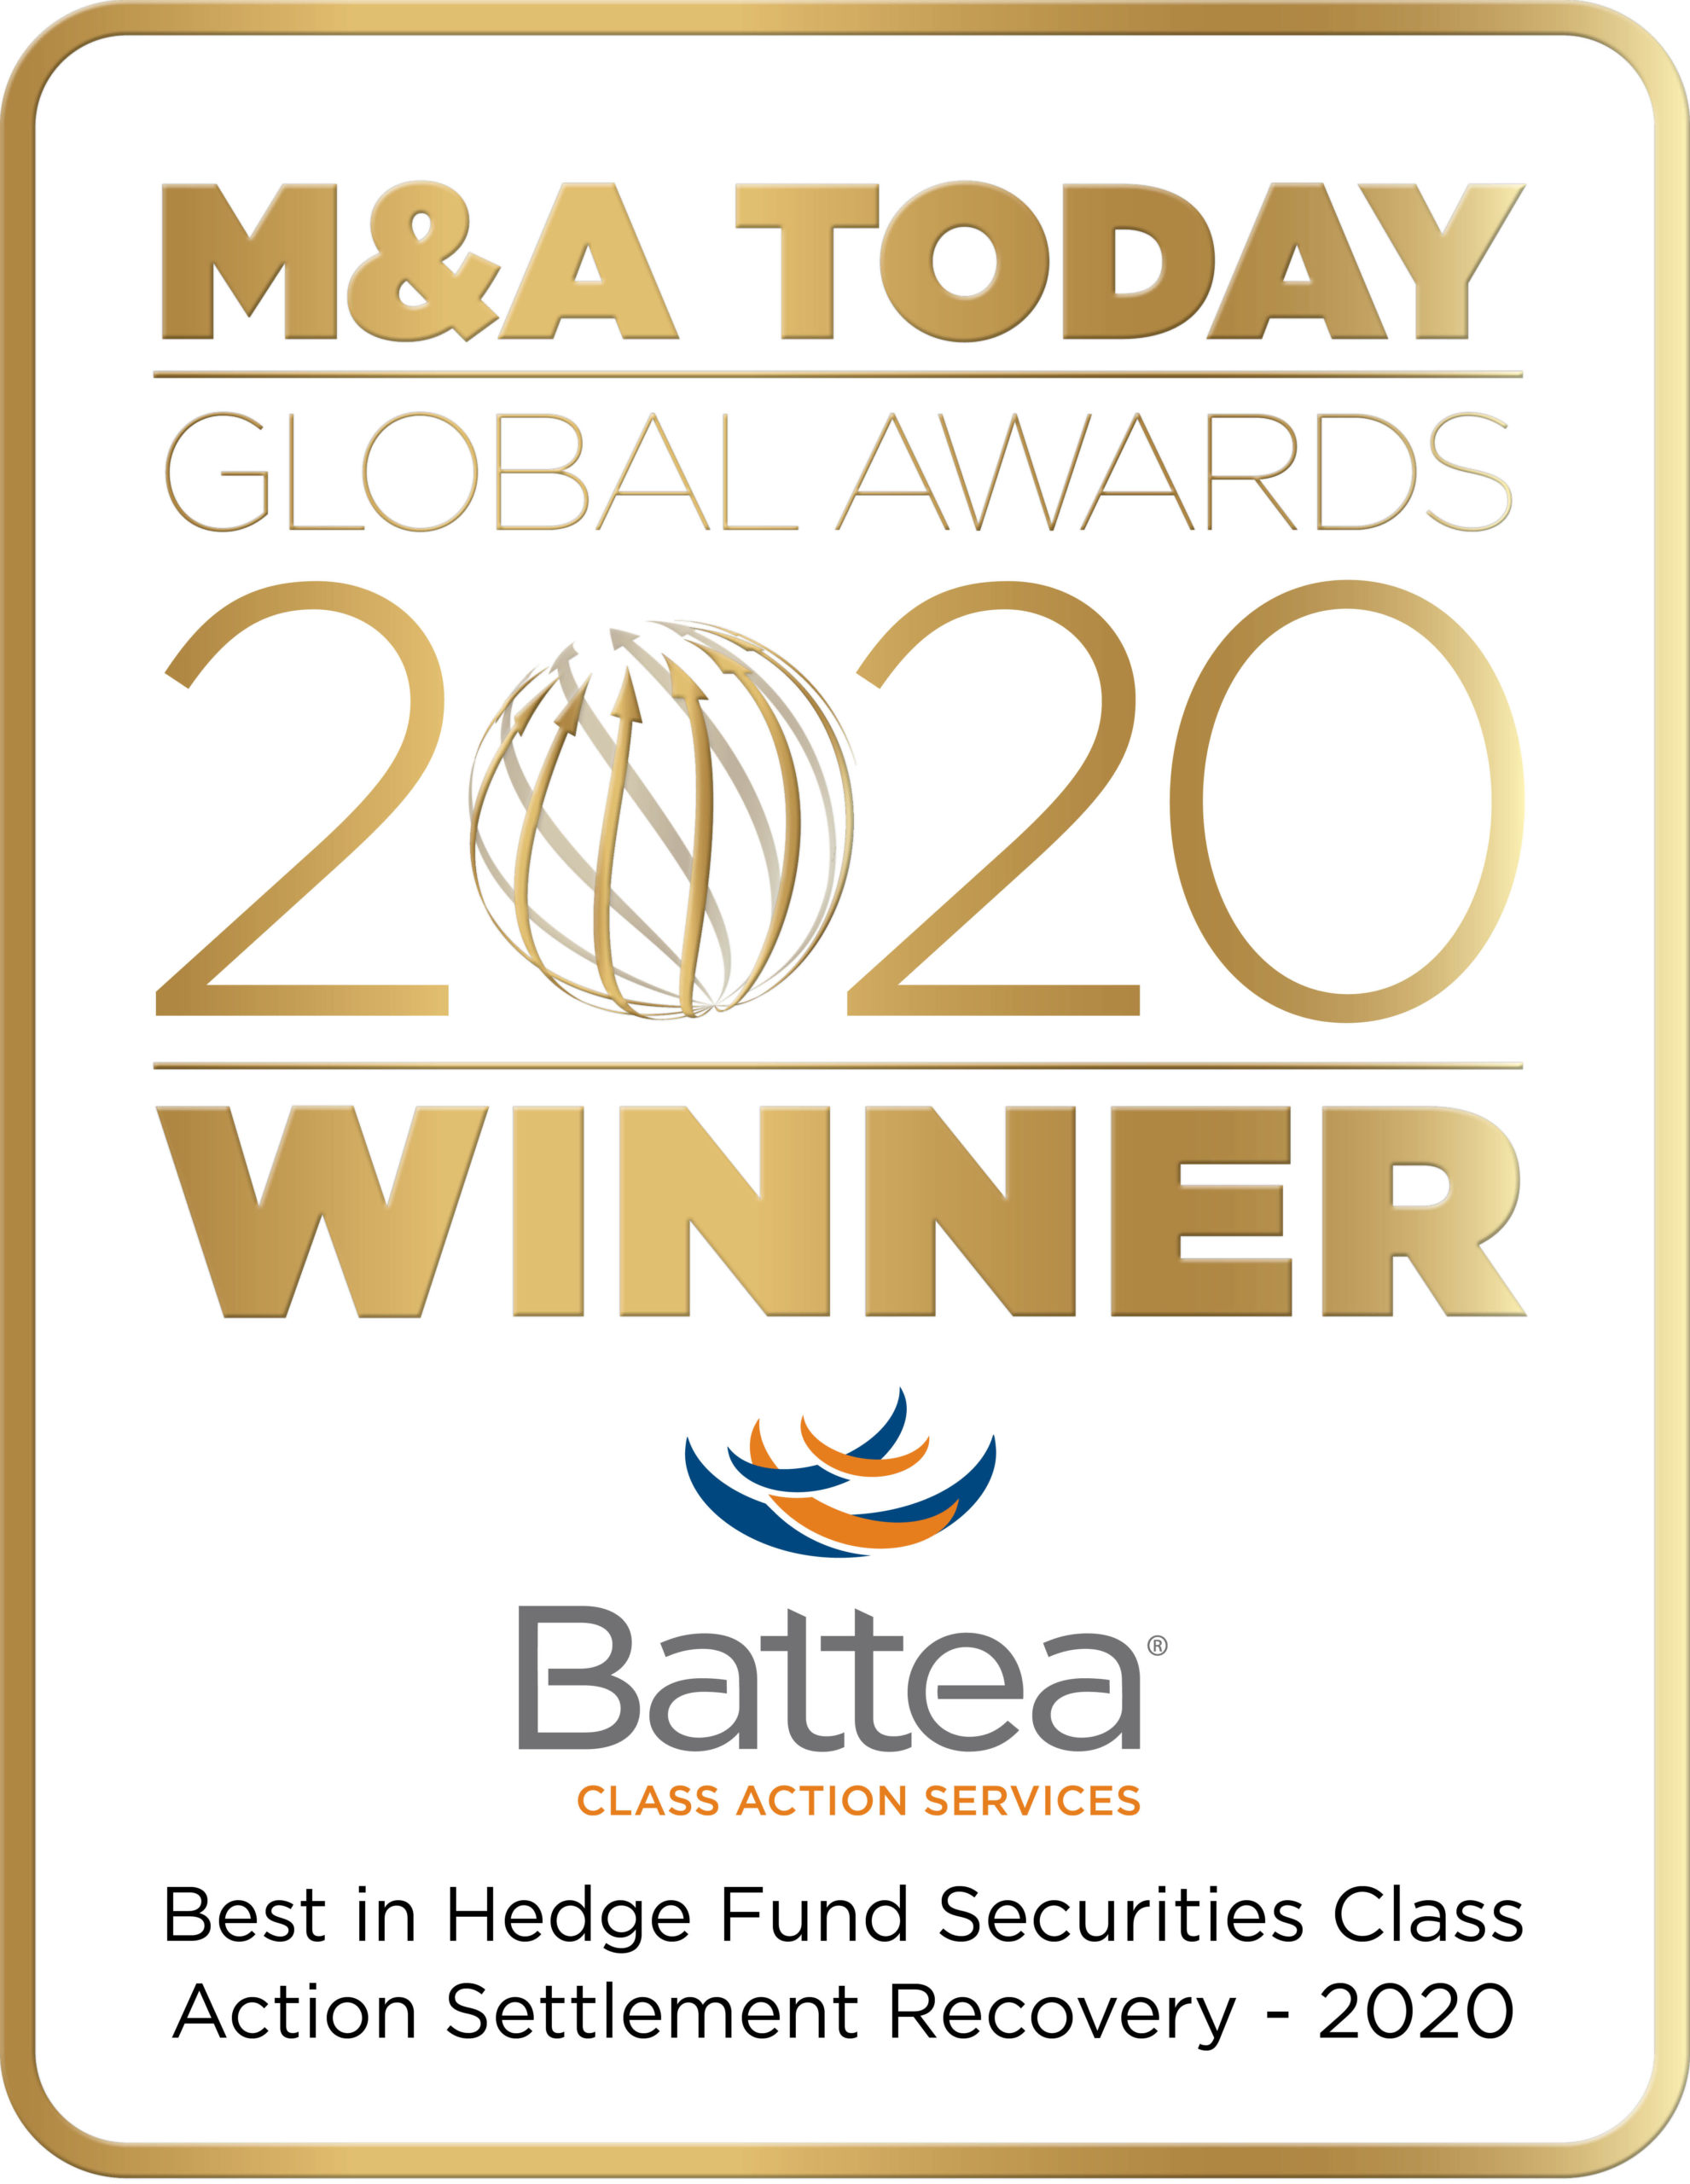 M&A Today Global Awards logo 2020_Battea Battea Class Action Services